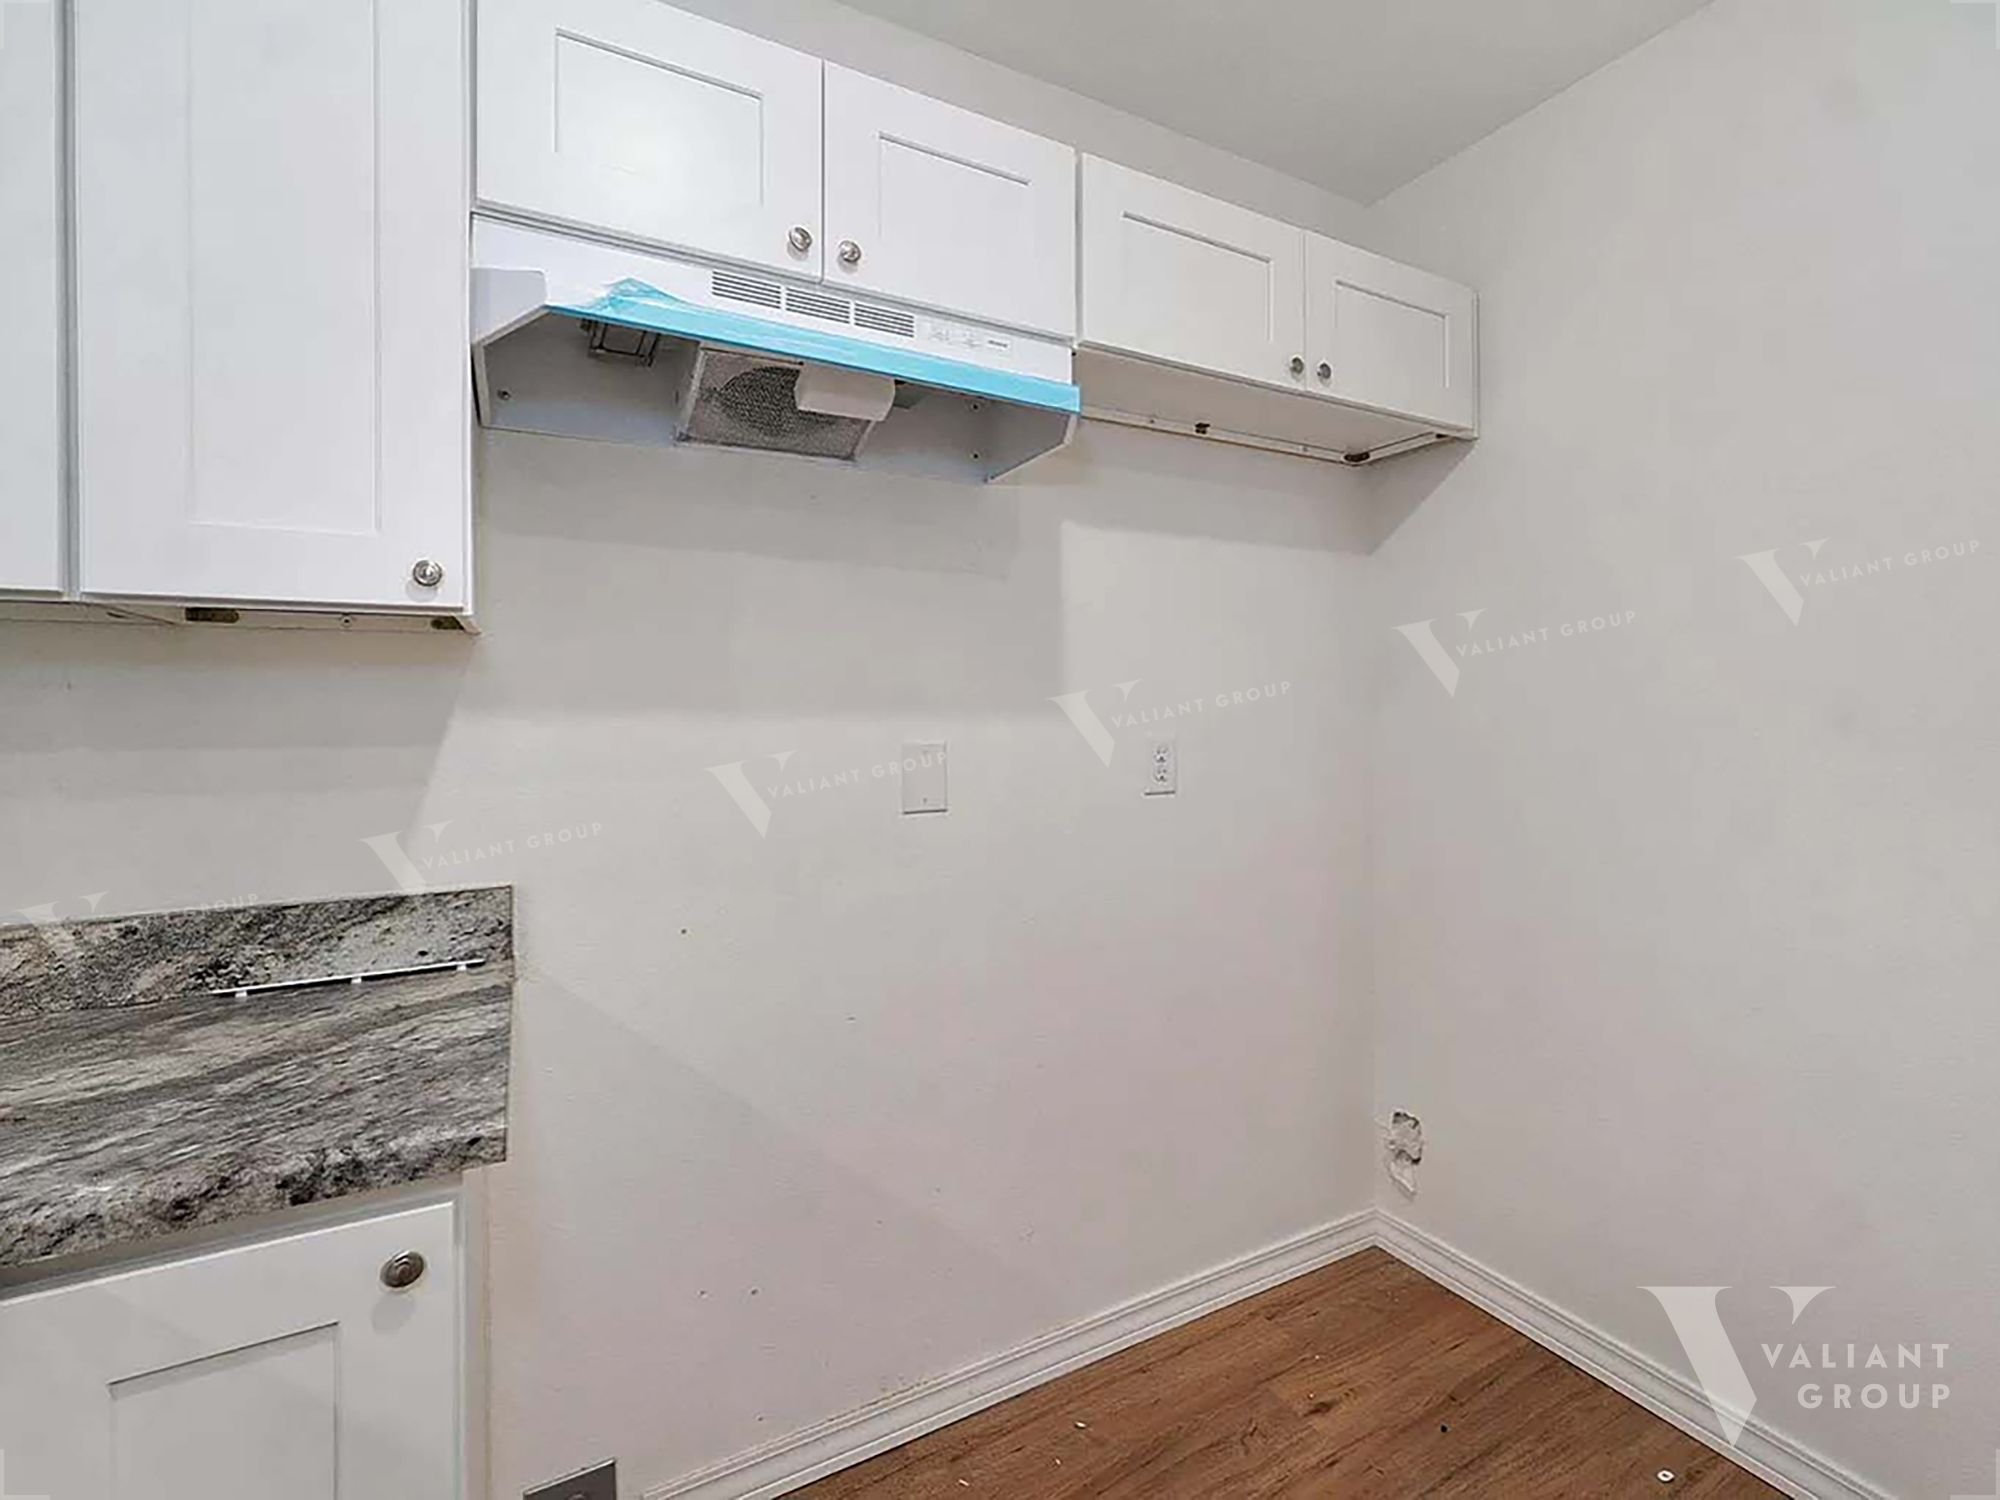 Duplex For Rent Springfield MO - 1602 West Scott St Unit A - kitchen stove fridge.jpg